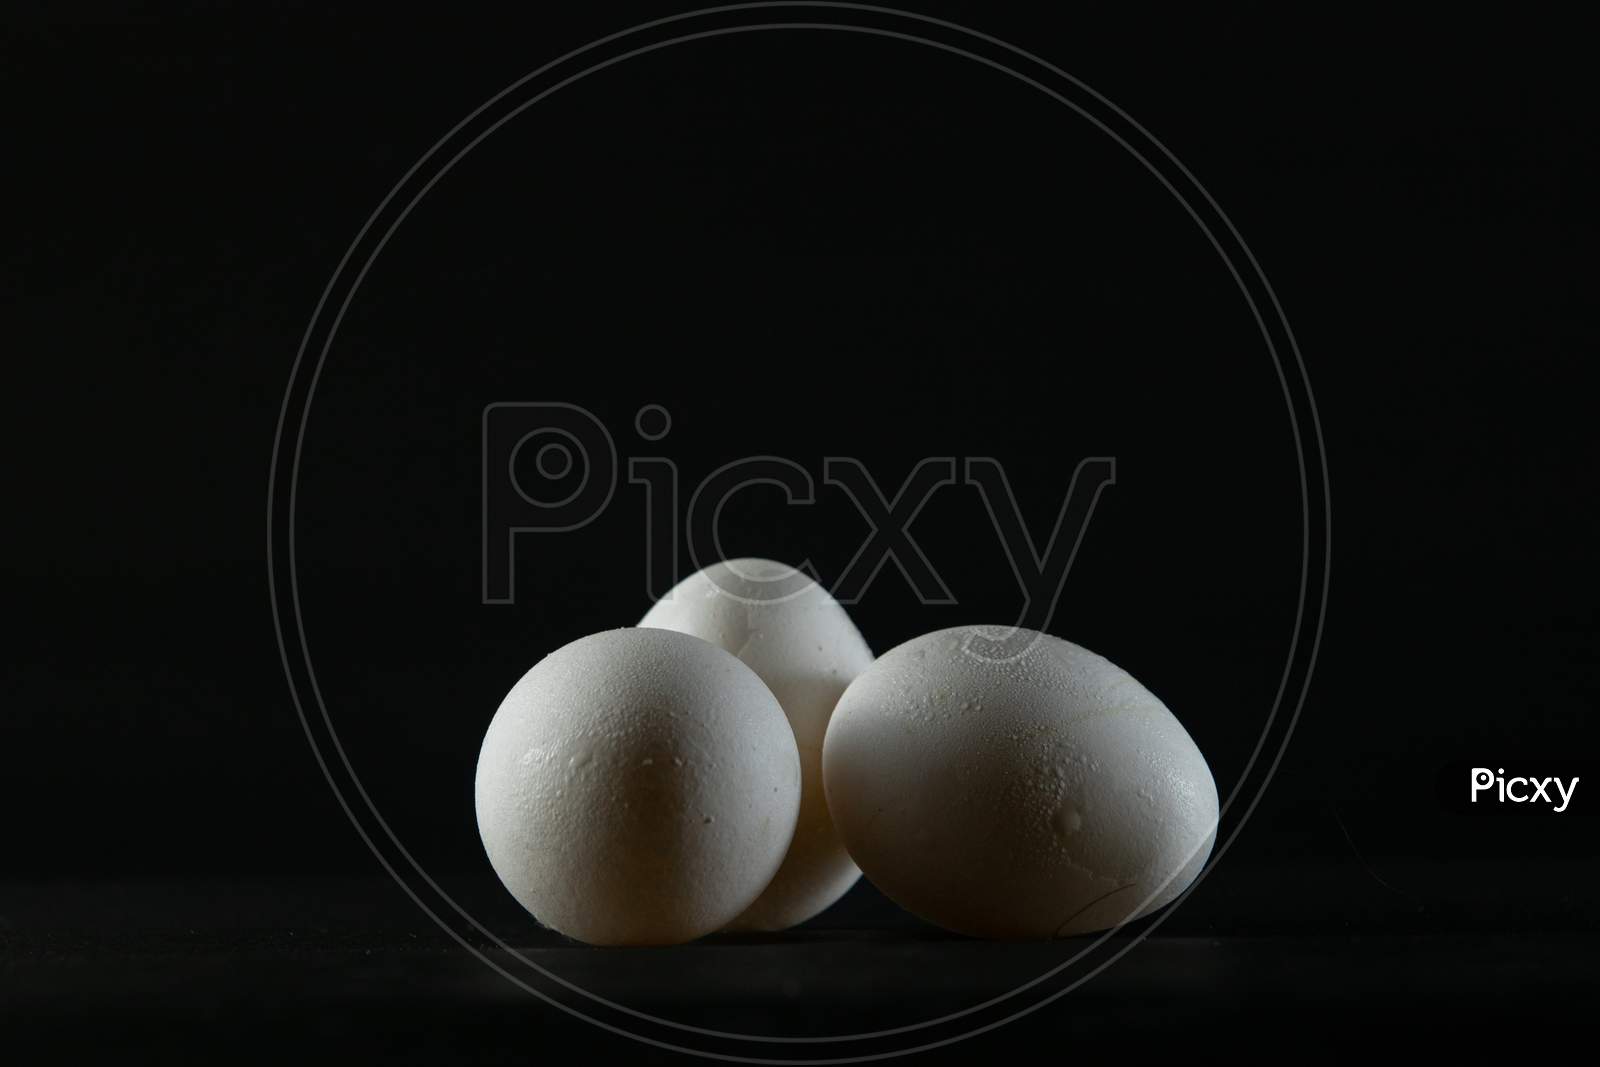 Eggs On Black Background